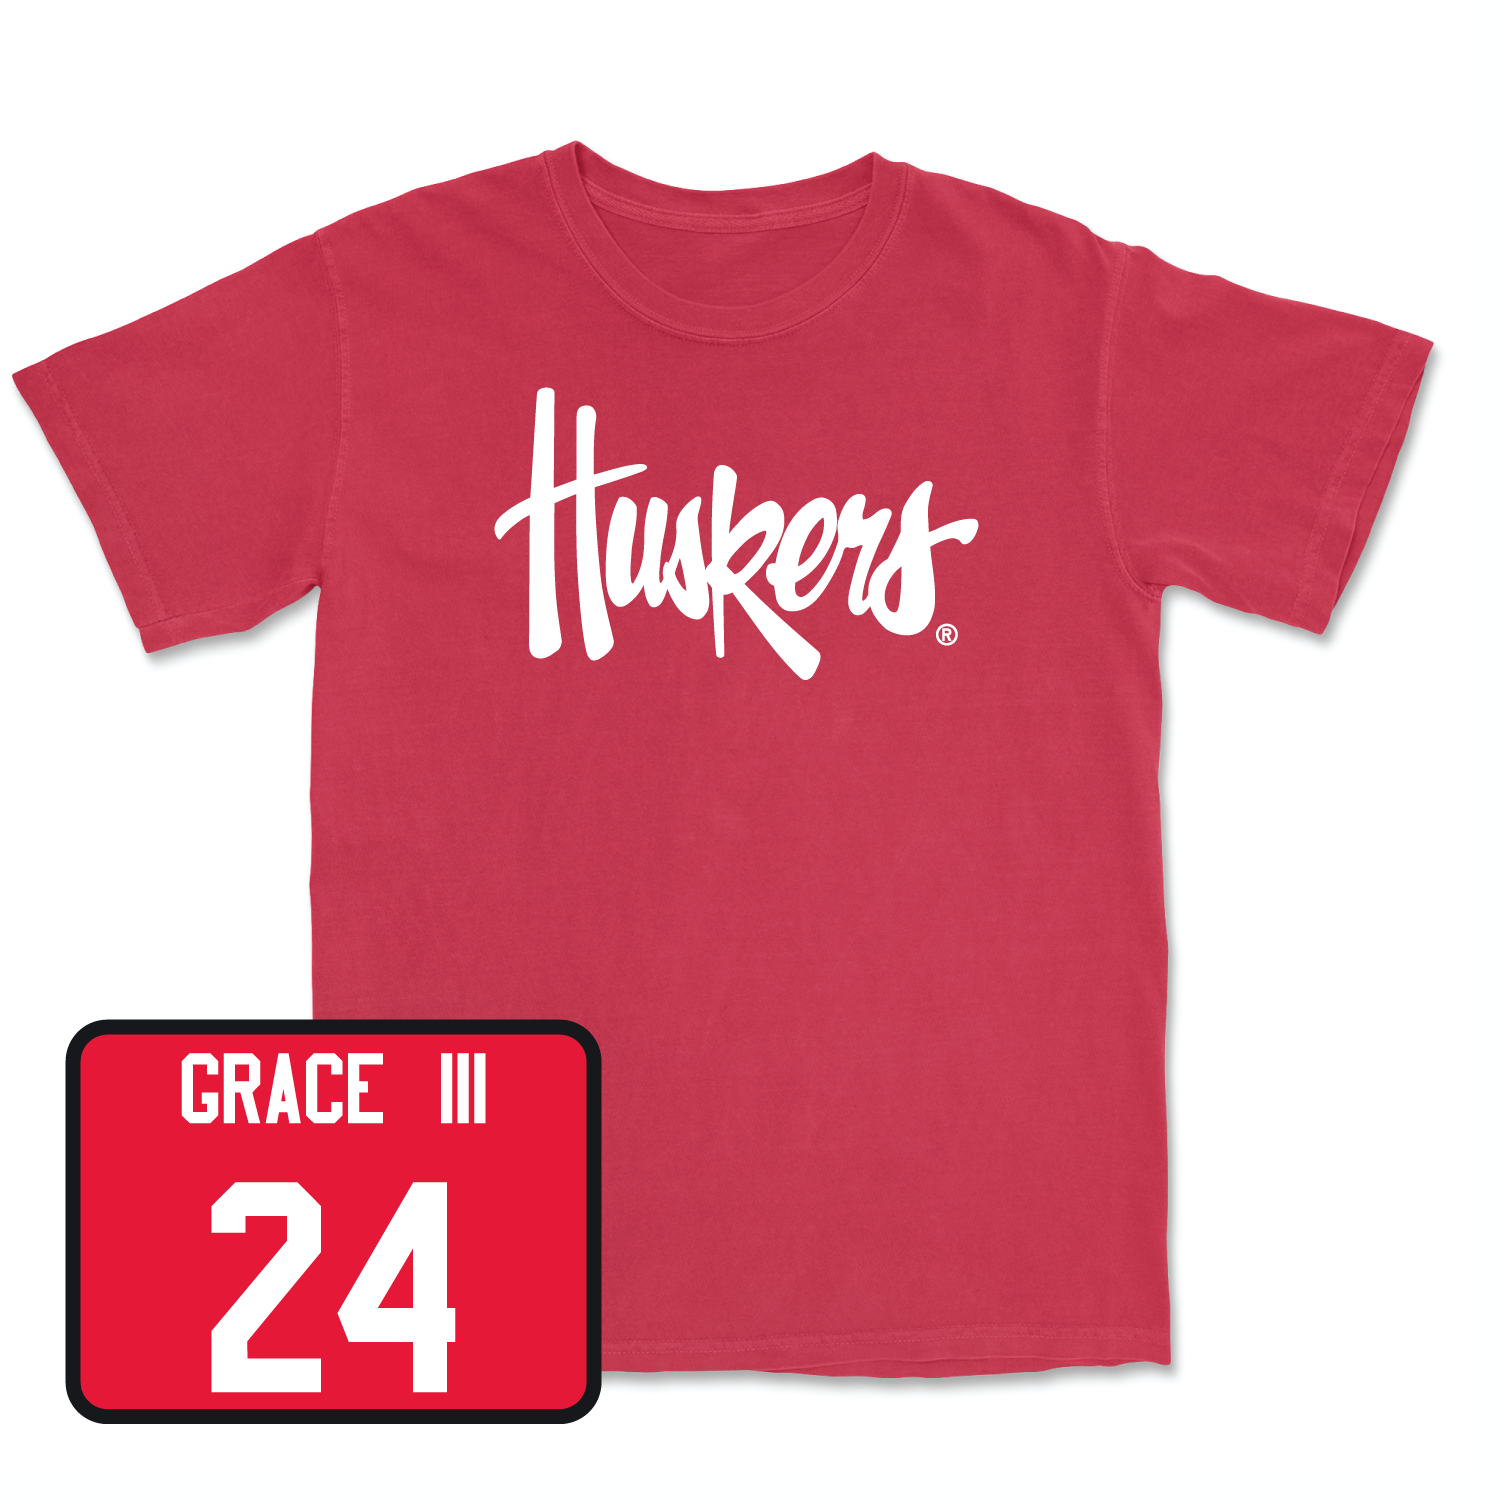 Red Men's Basketball Huskers Tee Small / Jeffrey Grace III | #24